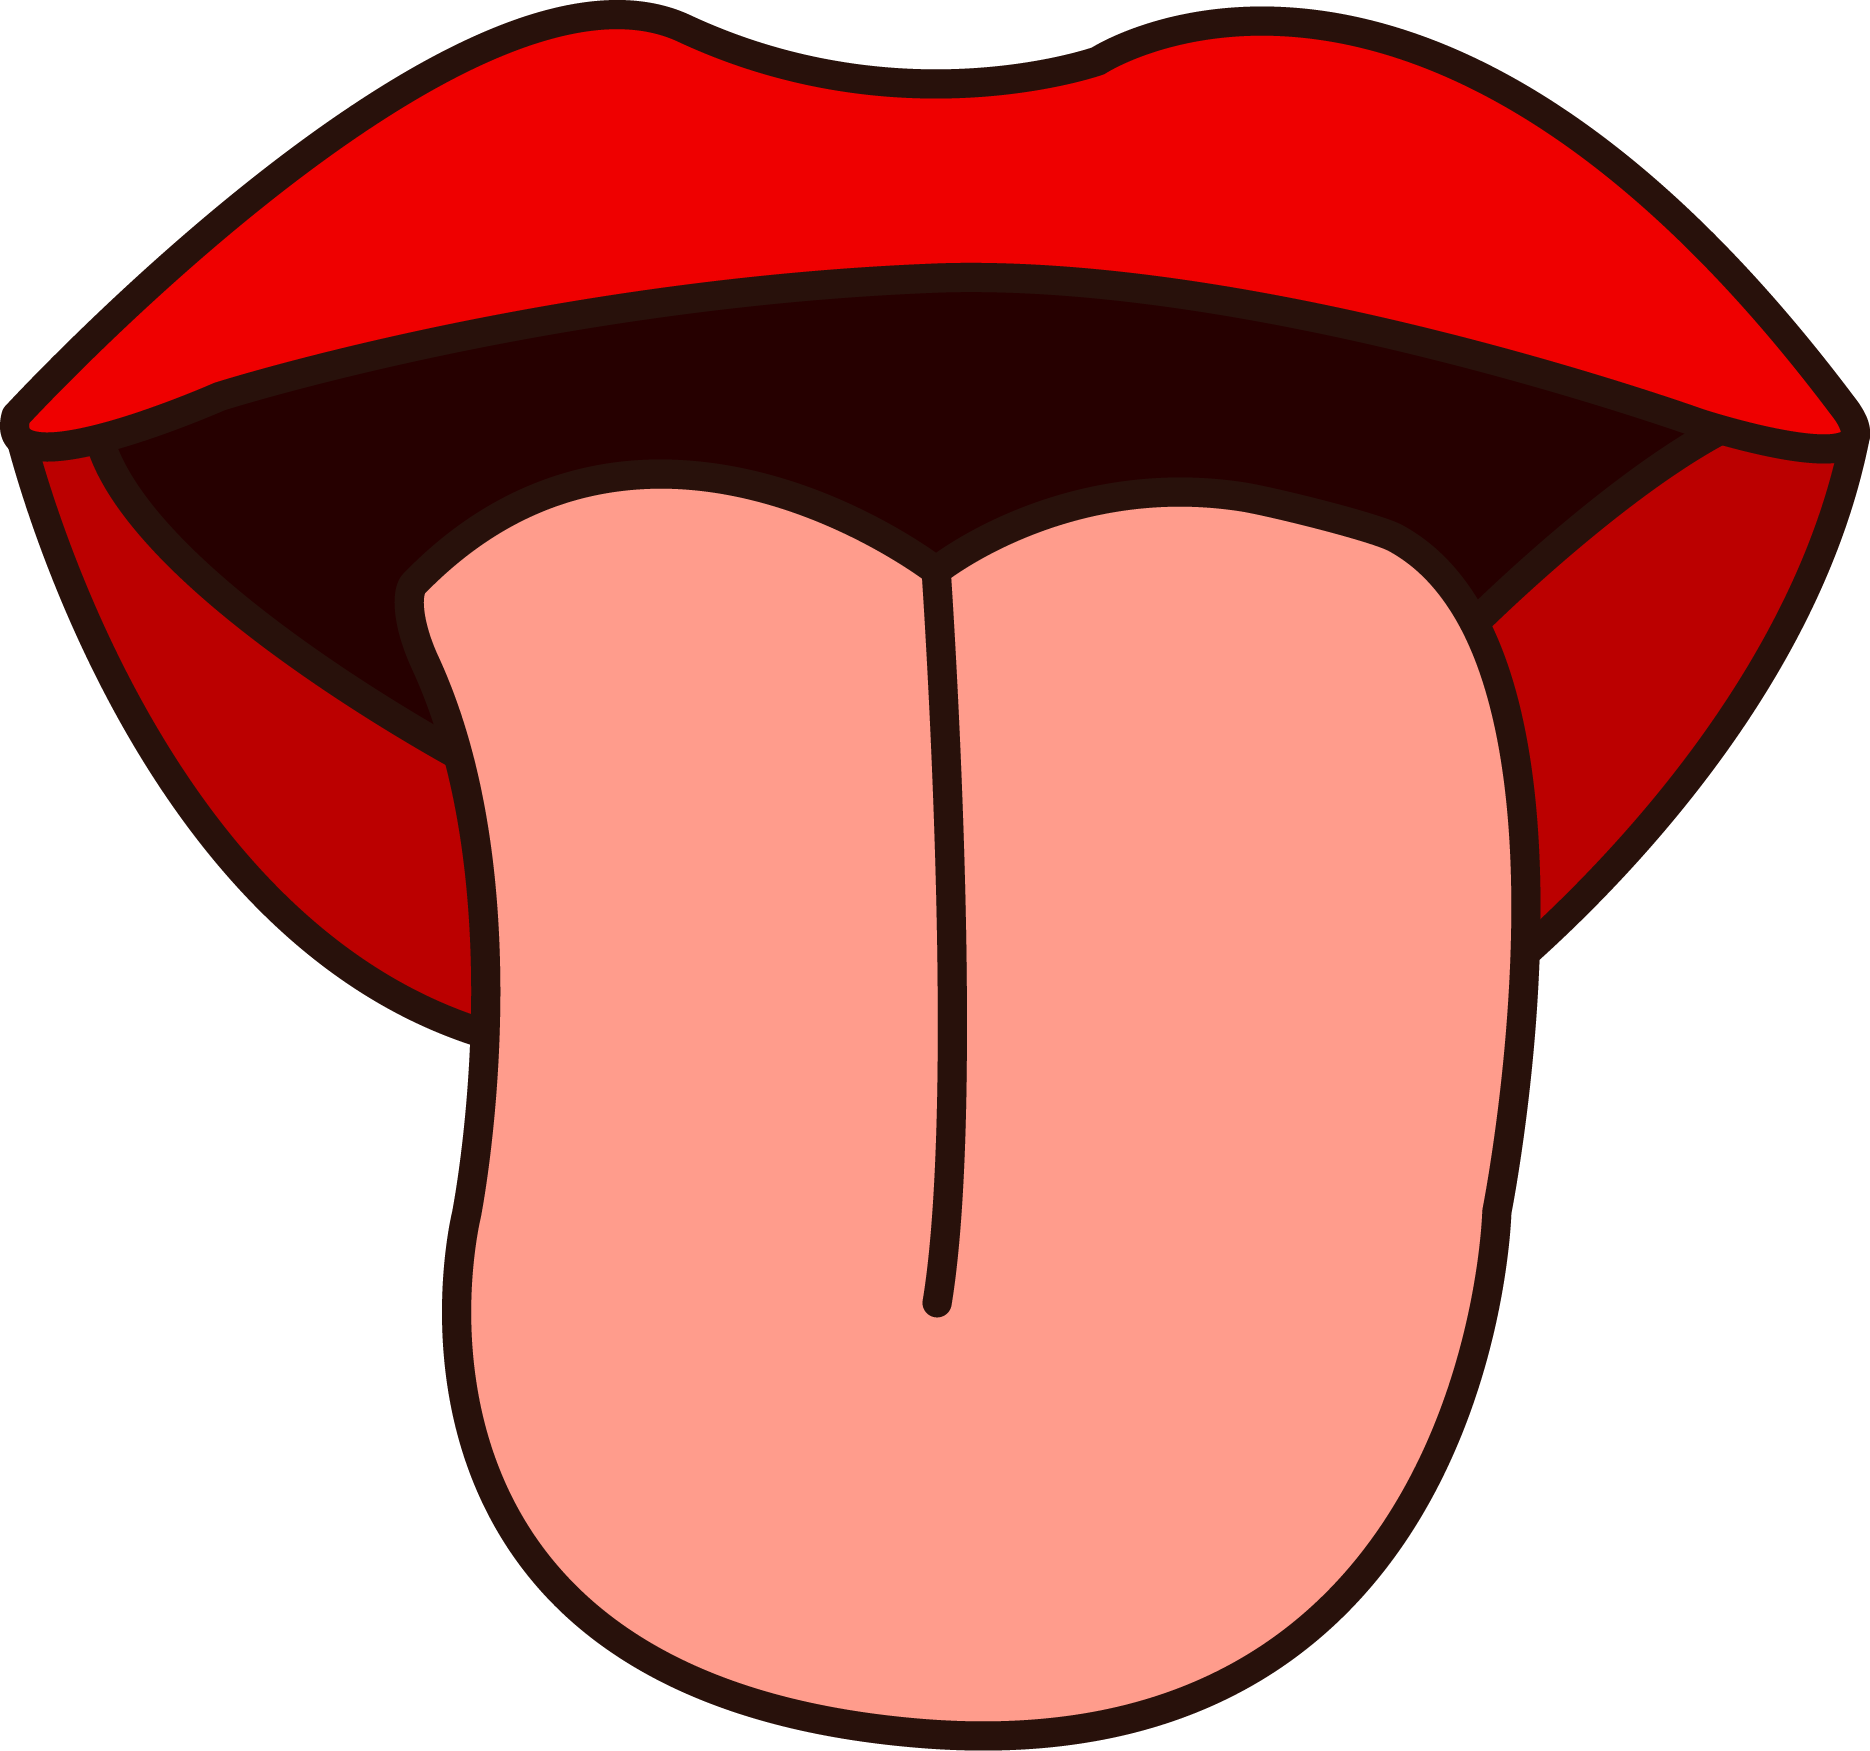 Tongue PNG - Cartoon Tongue Clipart Images - Free Transparent PNG Logos